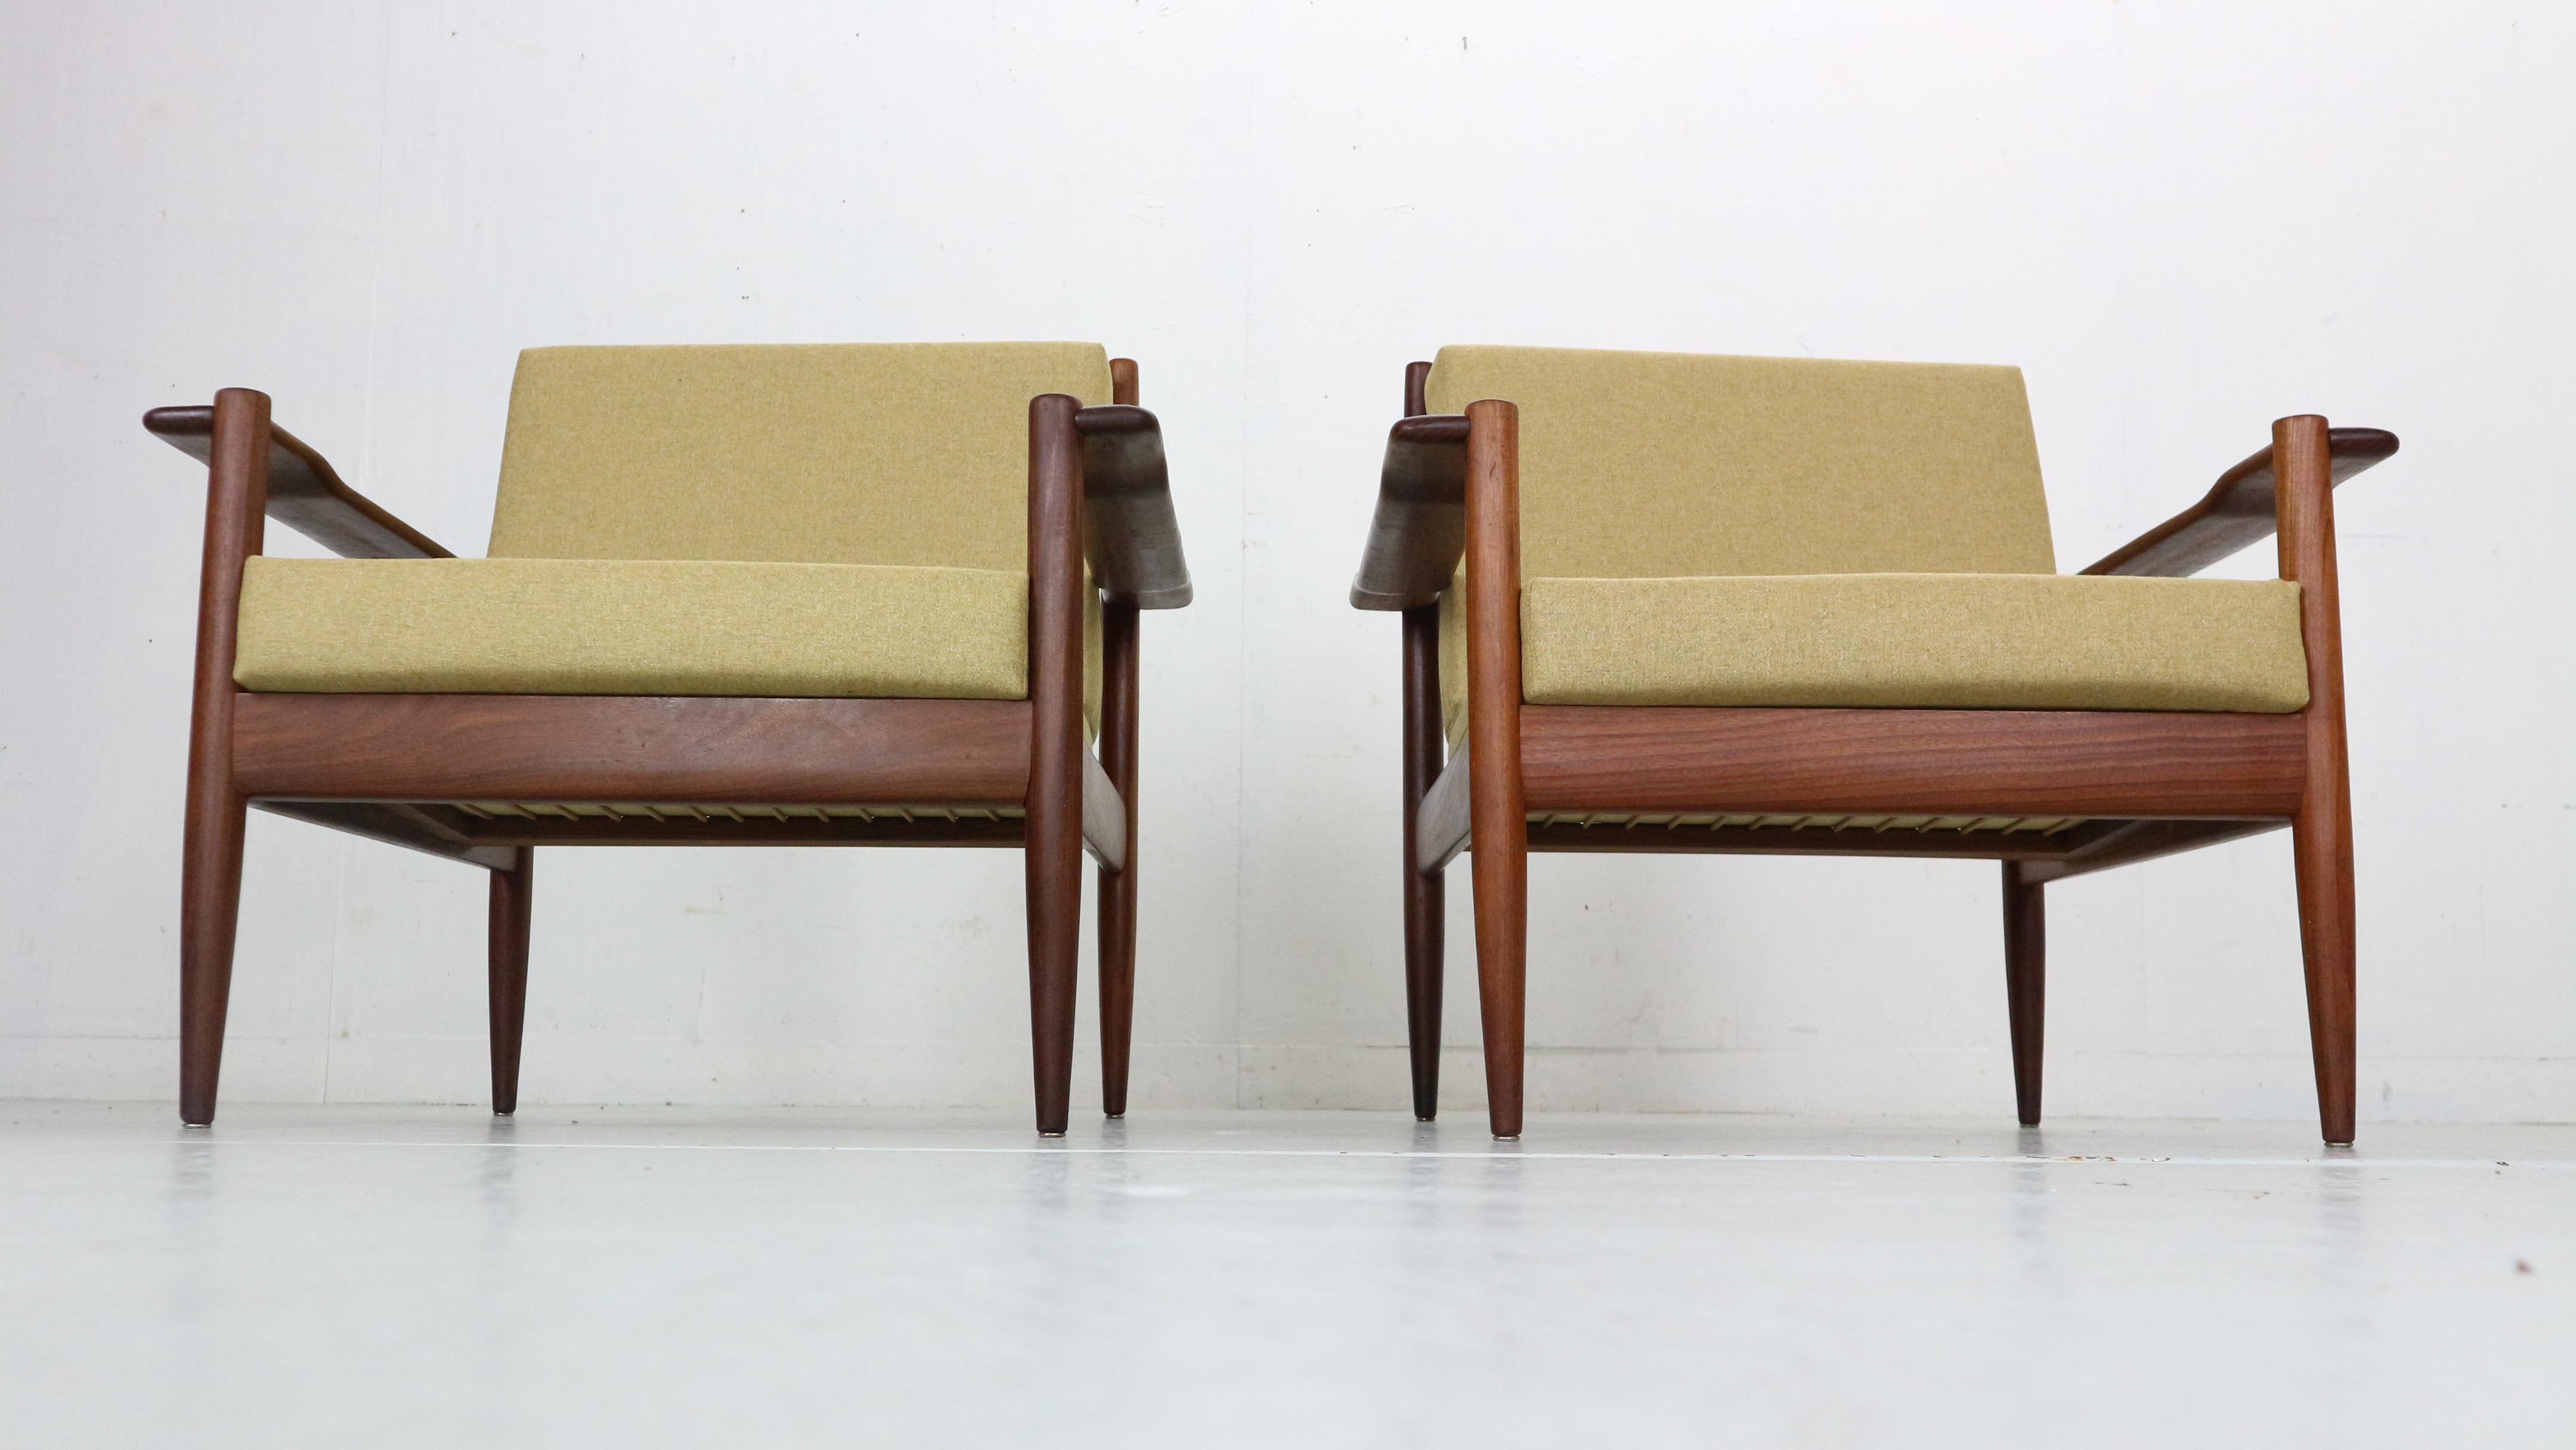 Mid-20th Century Scandinavian Modern Set of 2 Teak Lounge Chairs& New Upholstery, 1960's Denmark